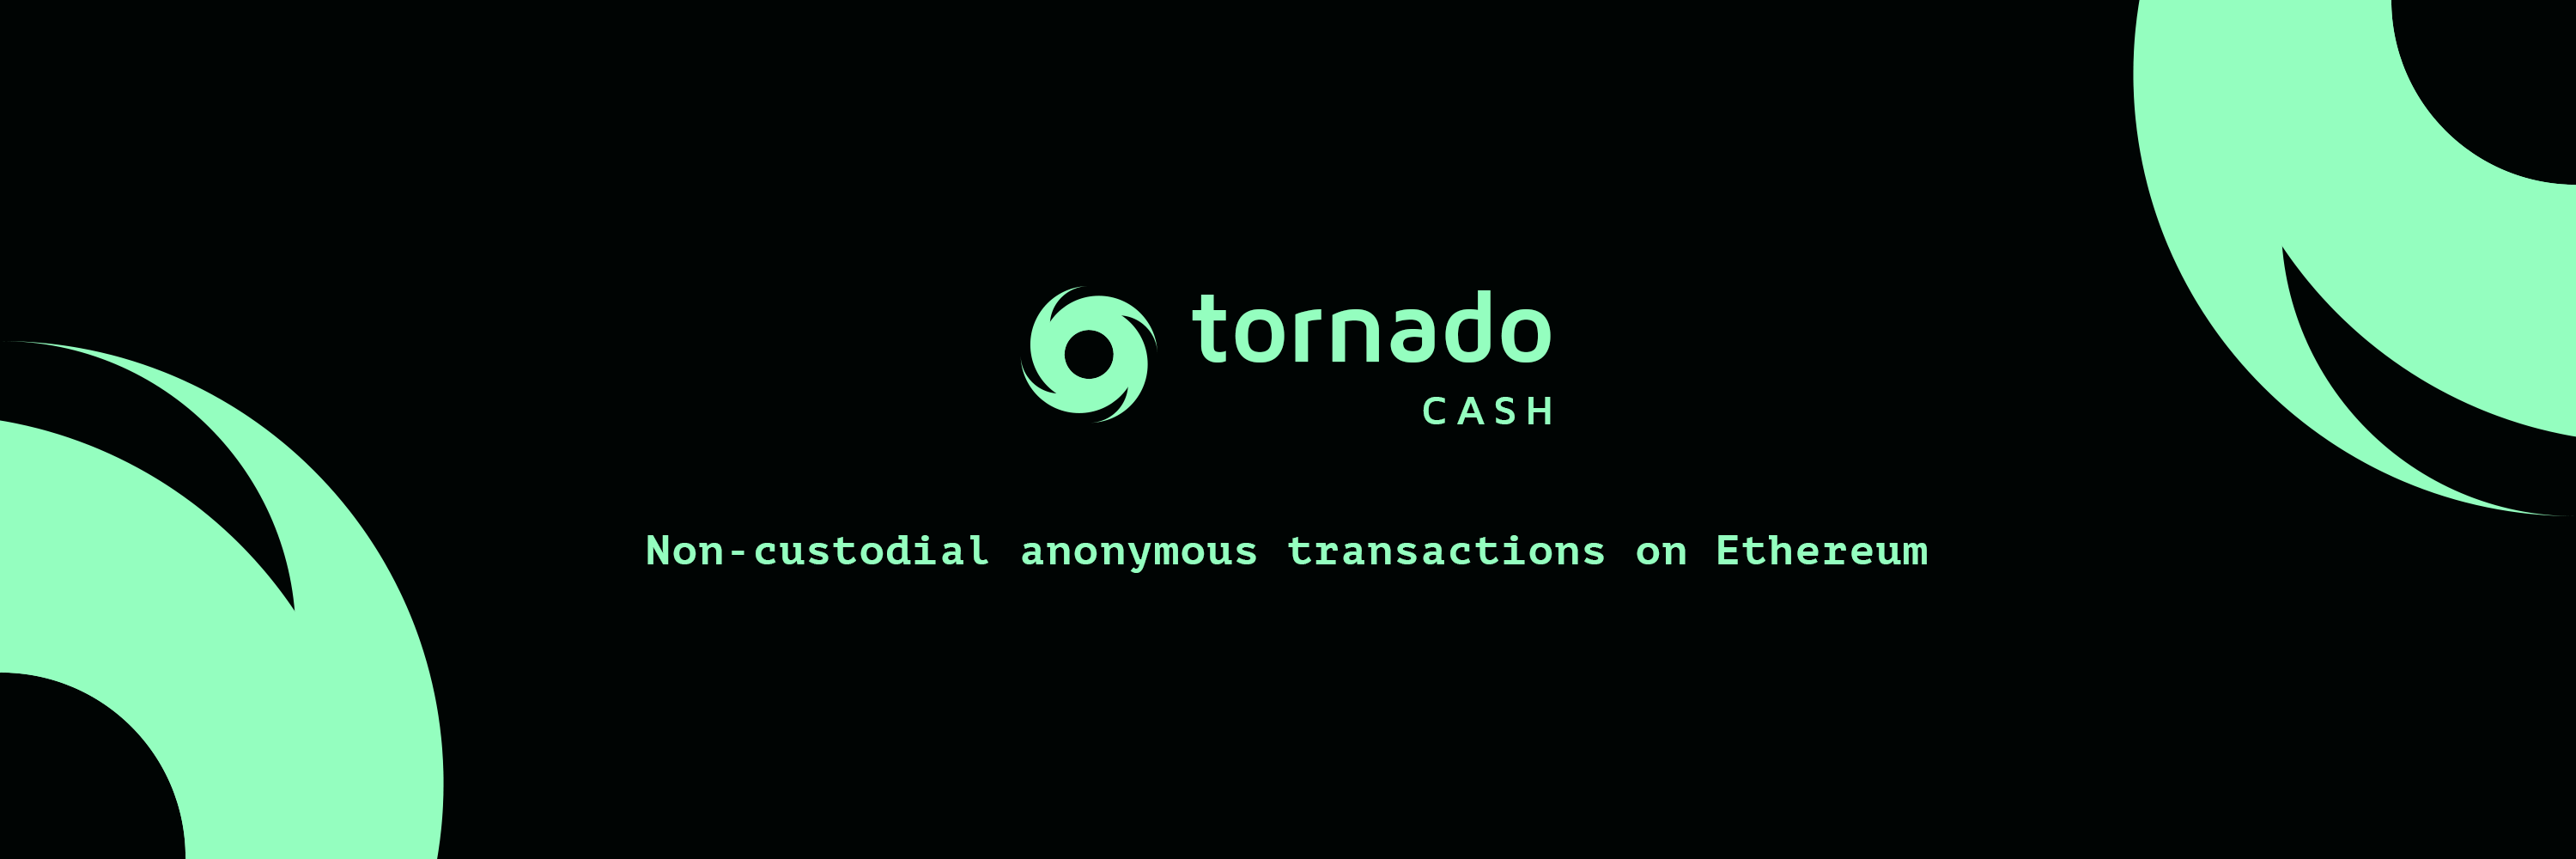 Tornado Cash banner